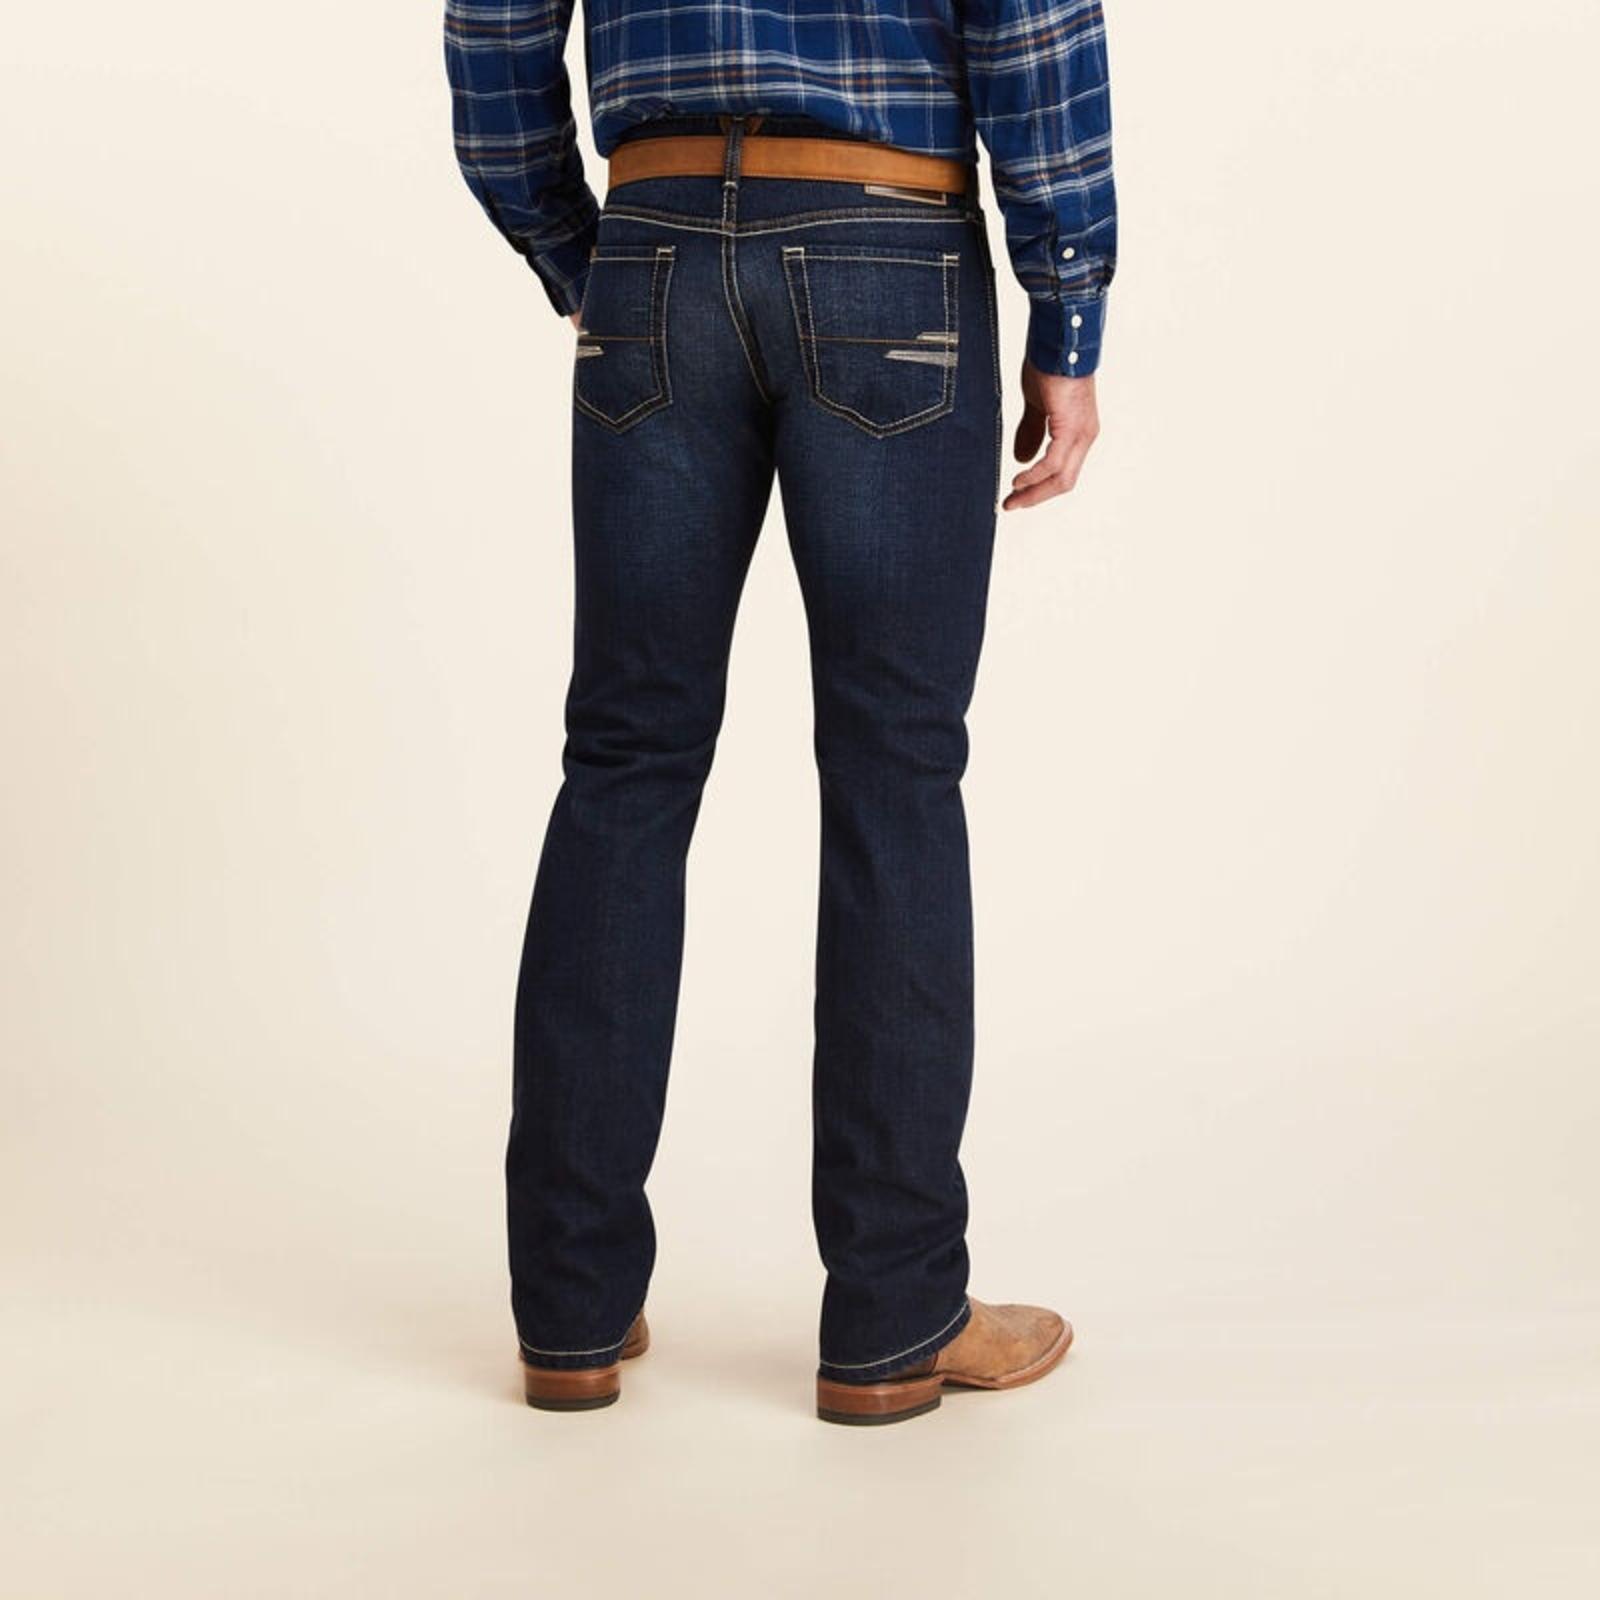 Ariat Men's M7 Slim Treven Straight Jean